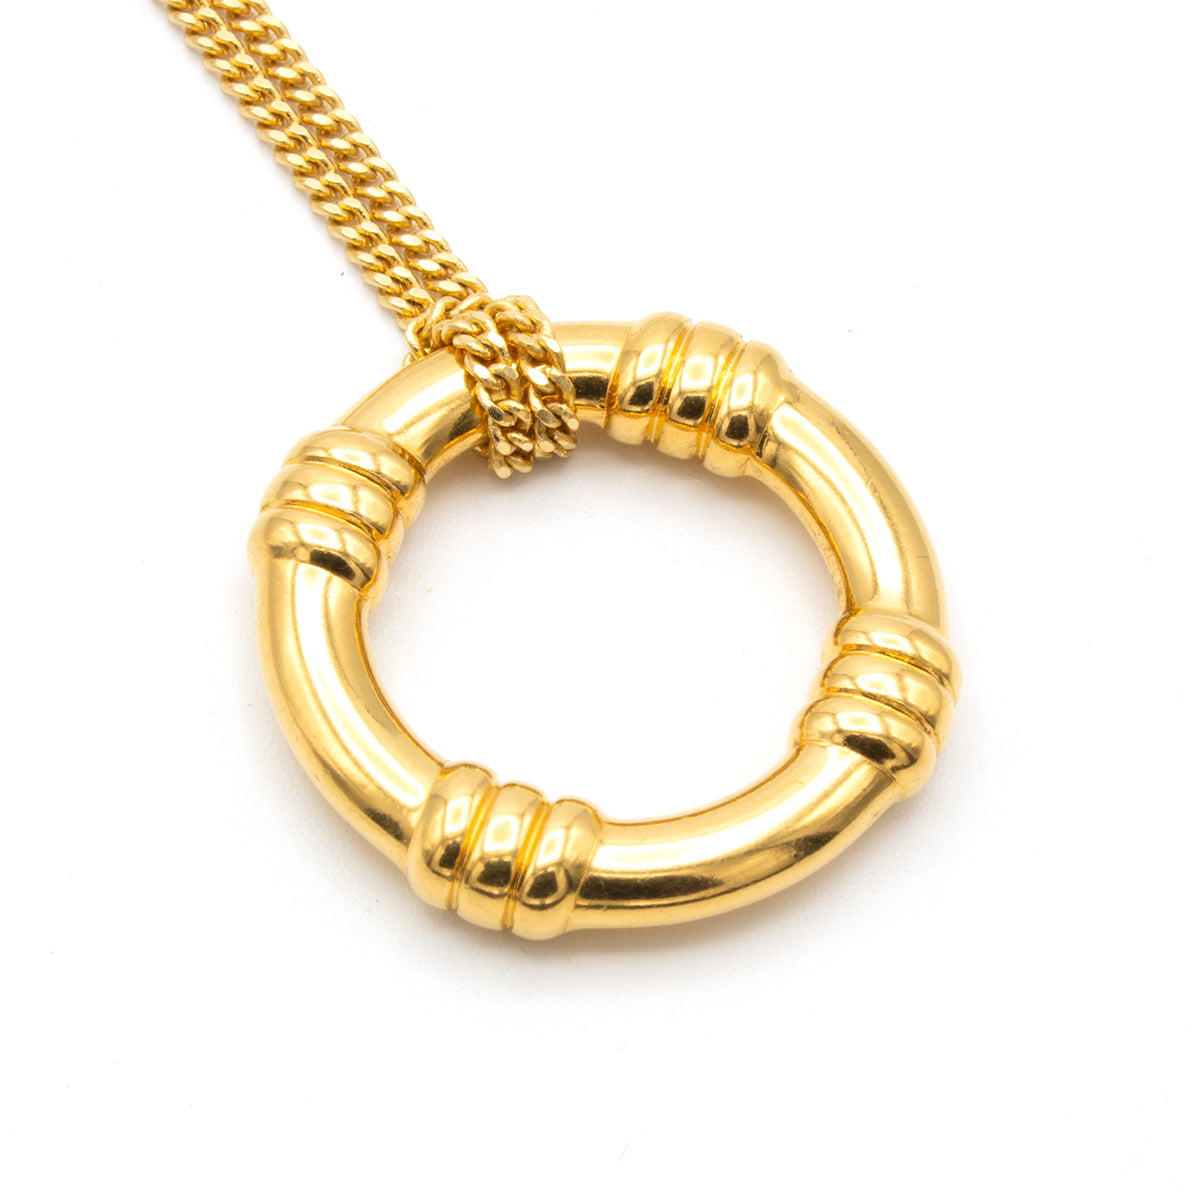 Hermes gold plated pendant